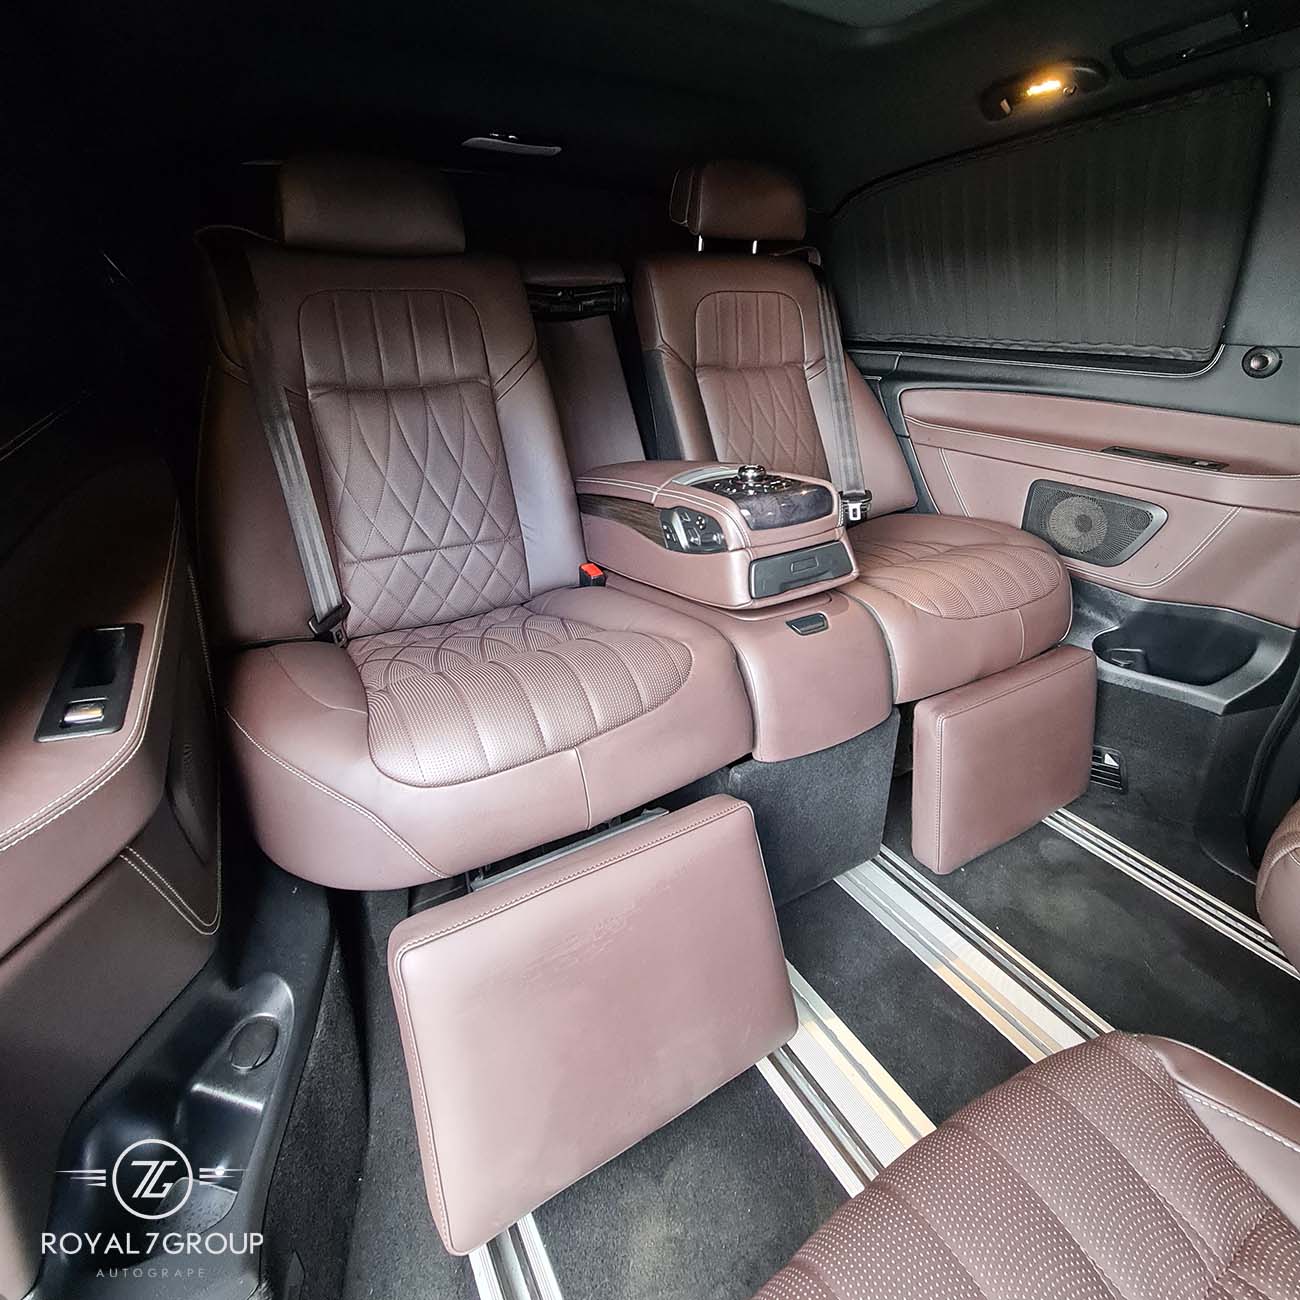 Замена сидений Mercedes v class автогрейп роял7бус